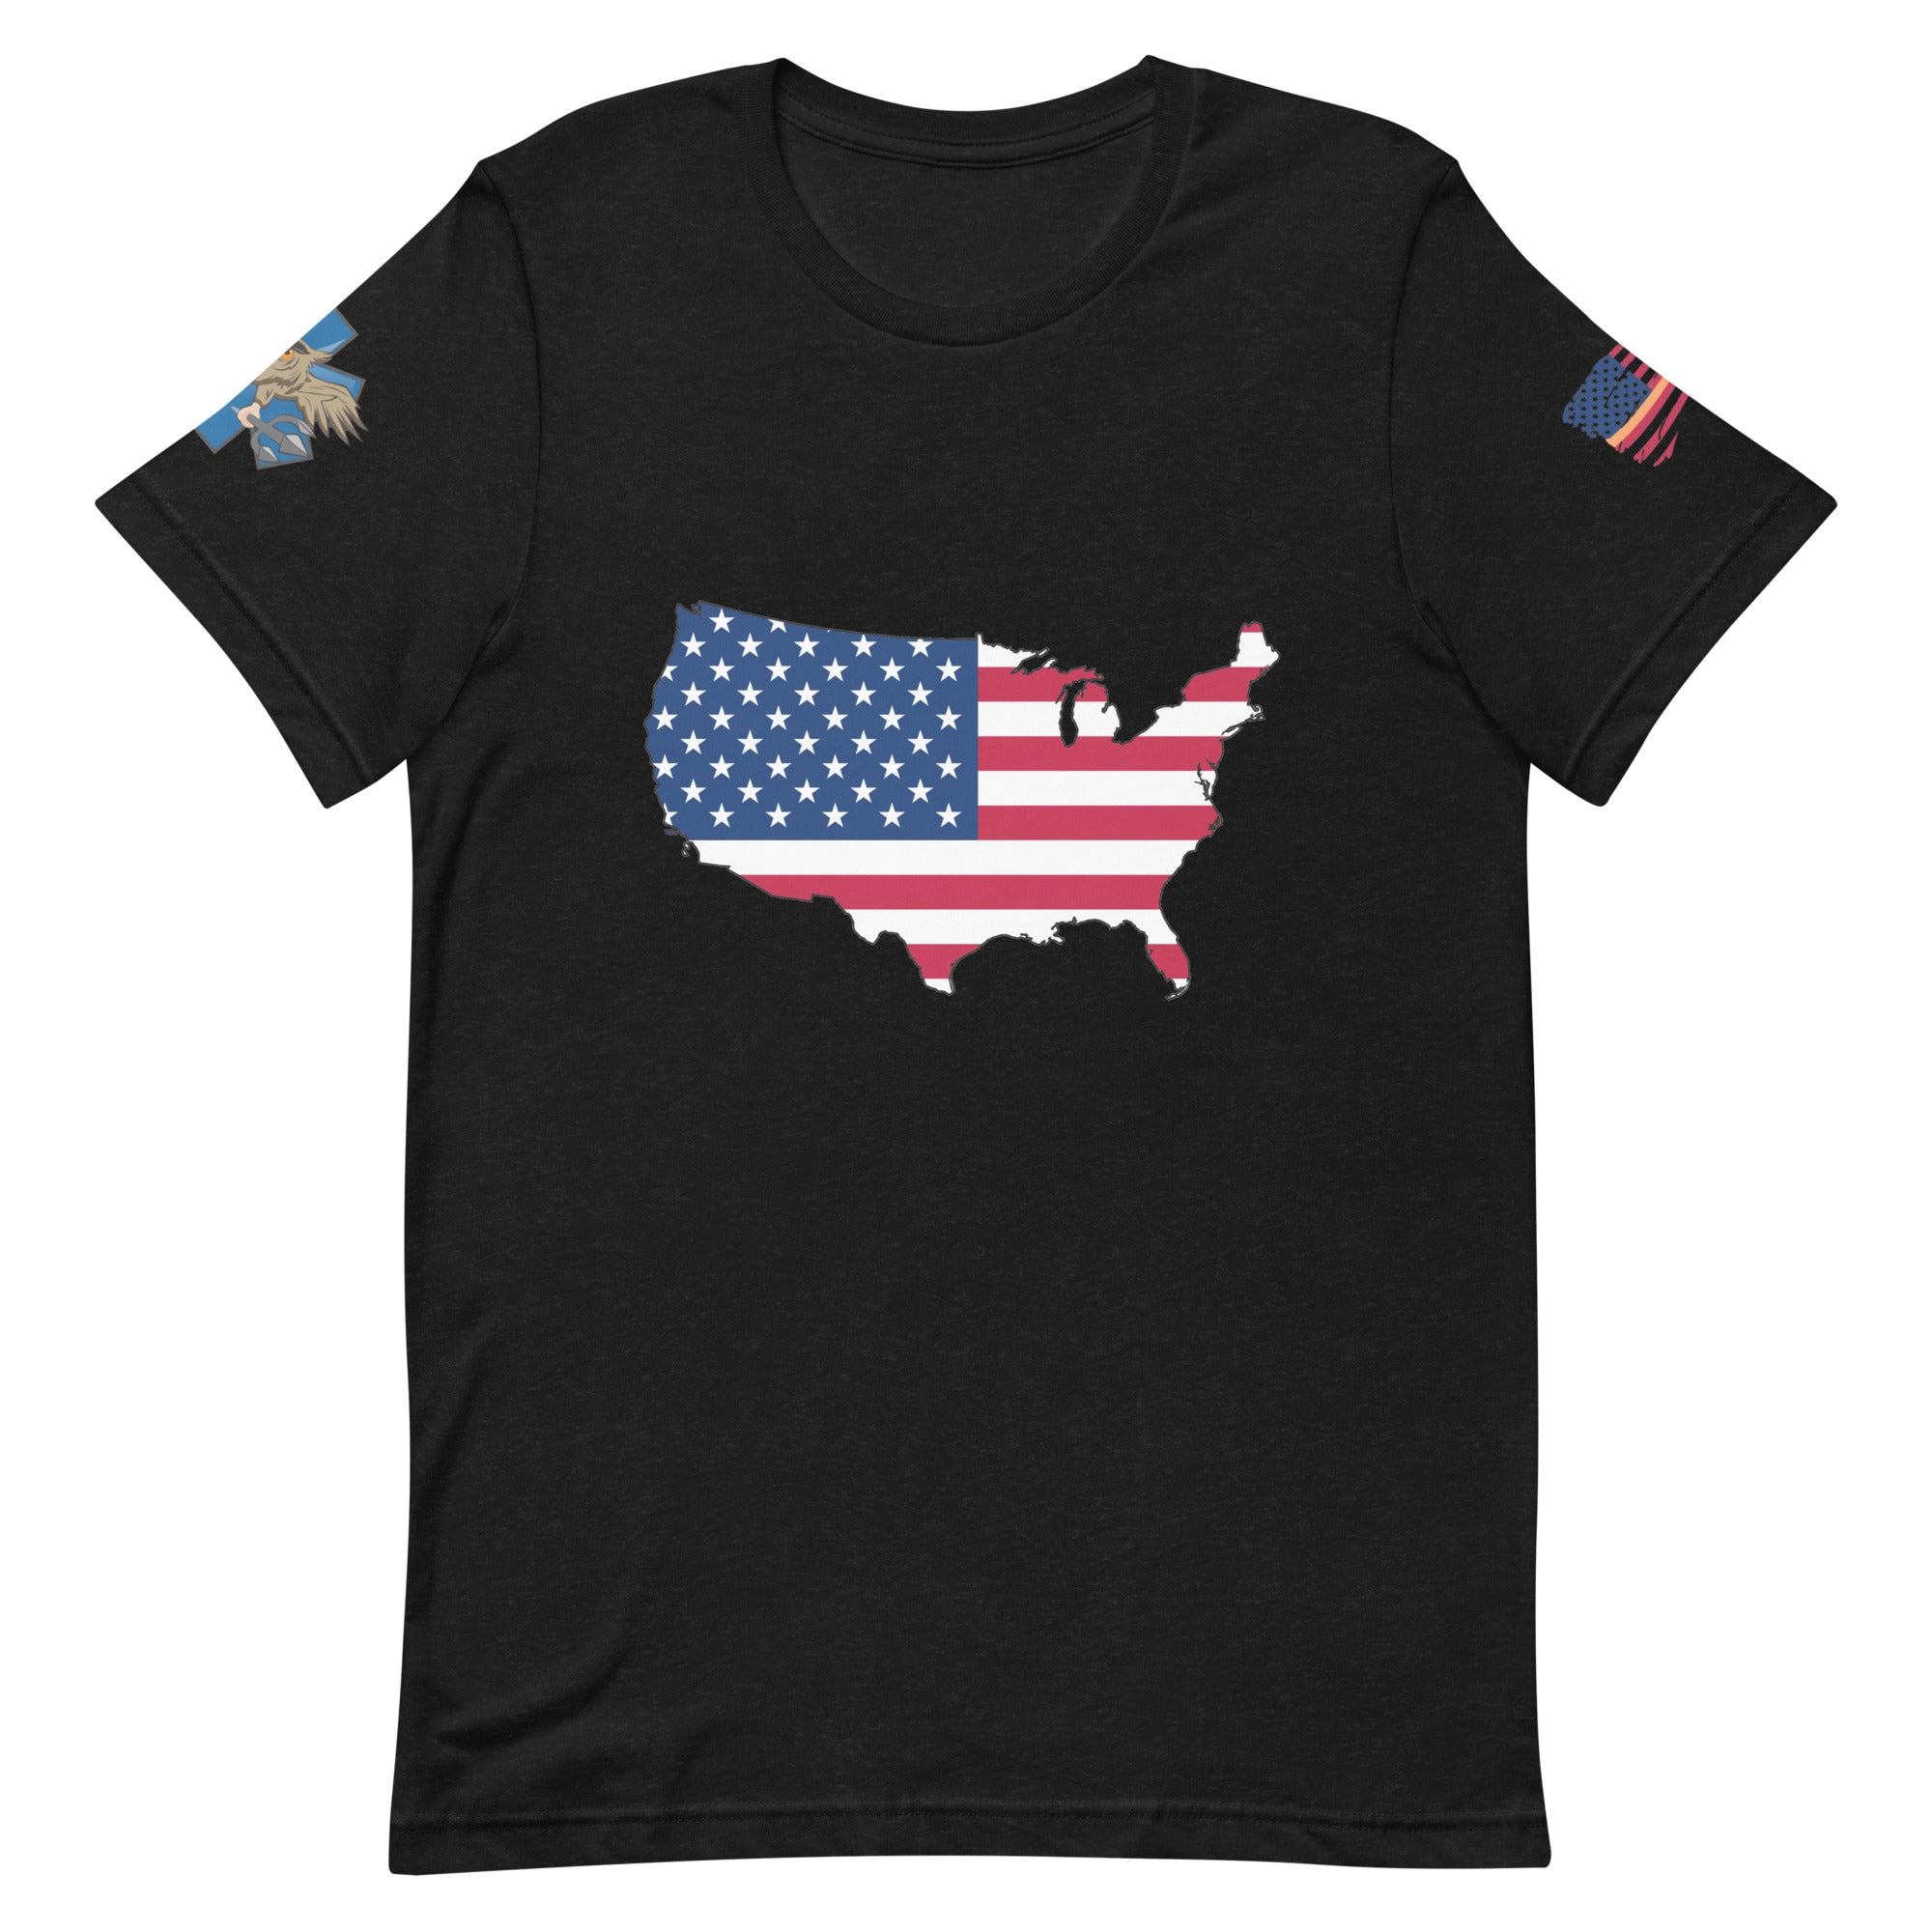 'America!' t-shirt